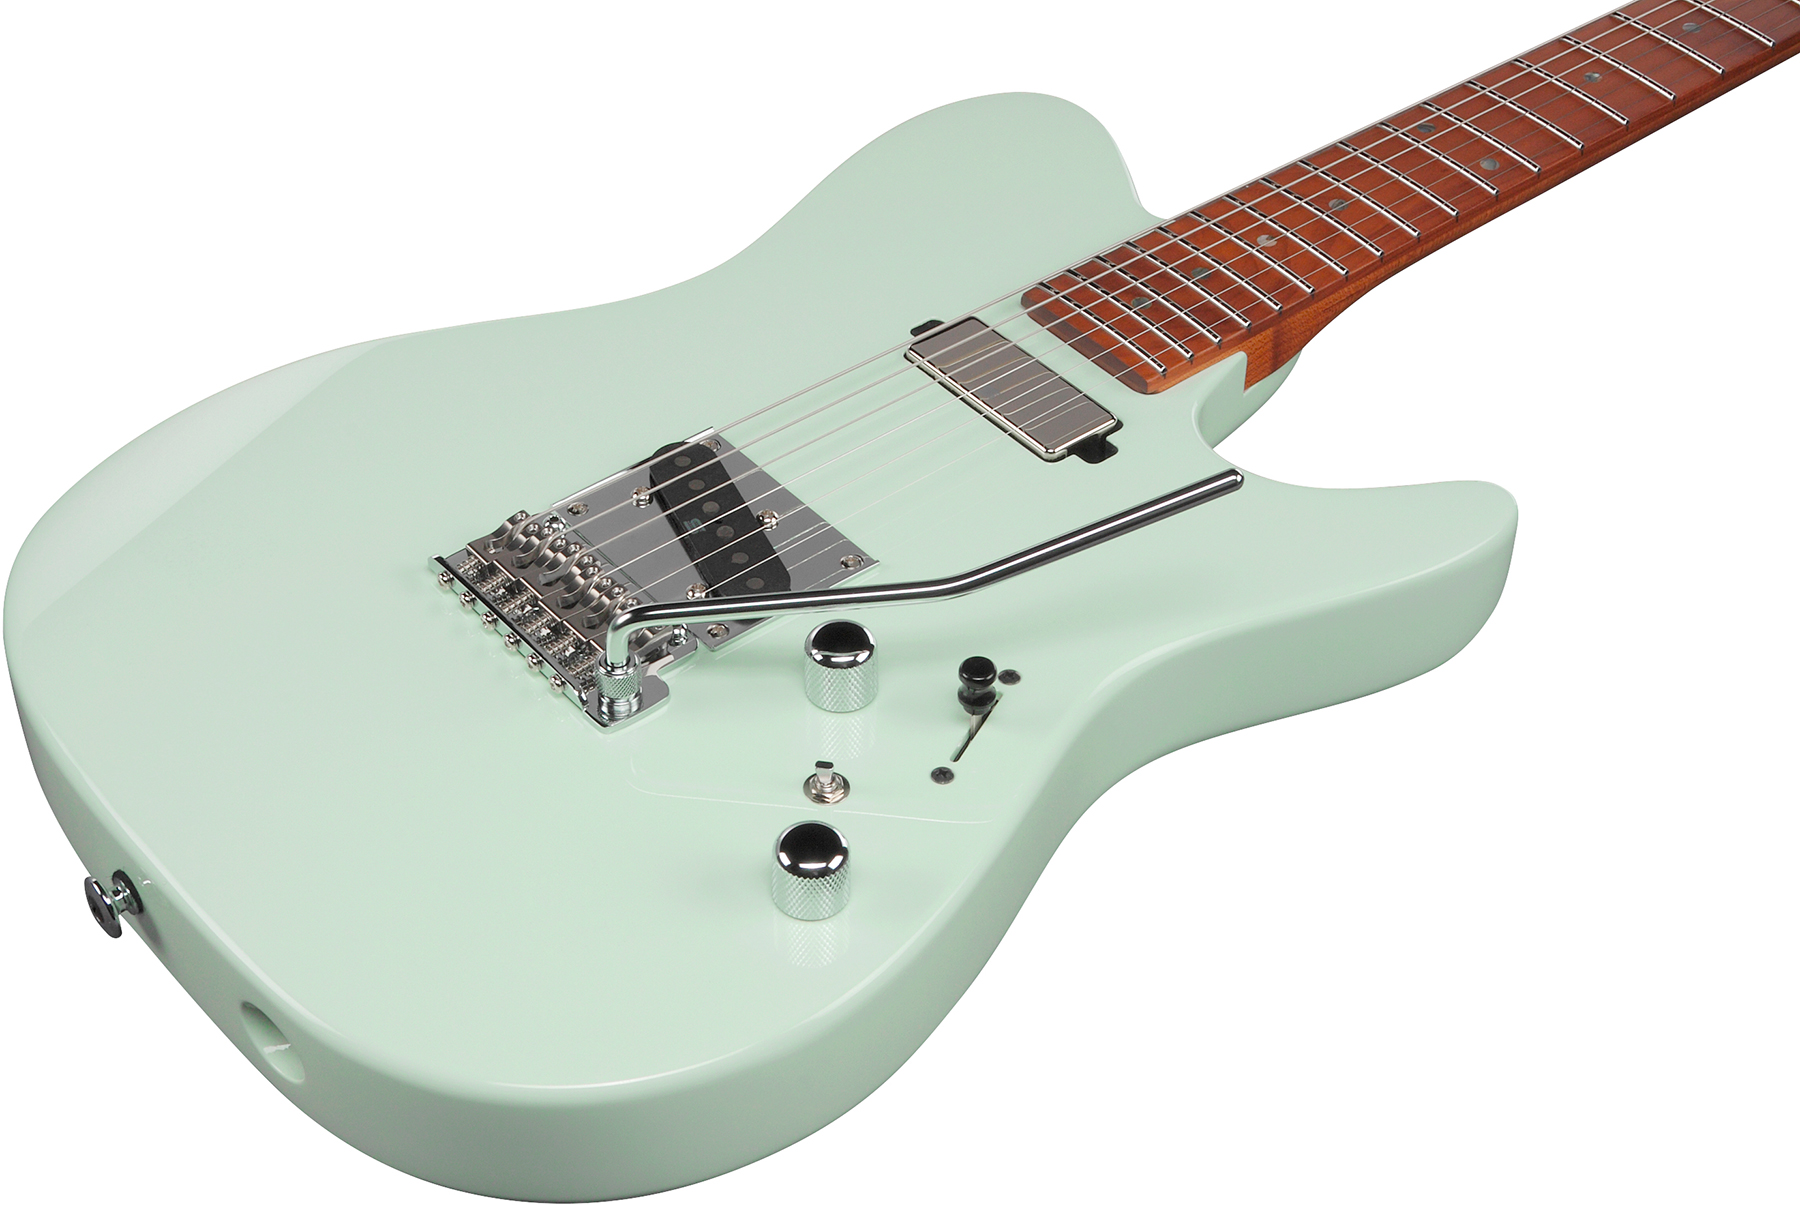 Ibanez Azs2200 Mgr Prestige Jap Smh Seymour Duncan Trem Mn - Mint Green - Tel shape electric guitar - Variation 2